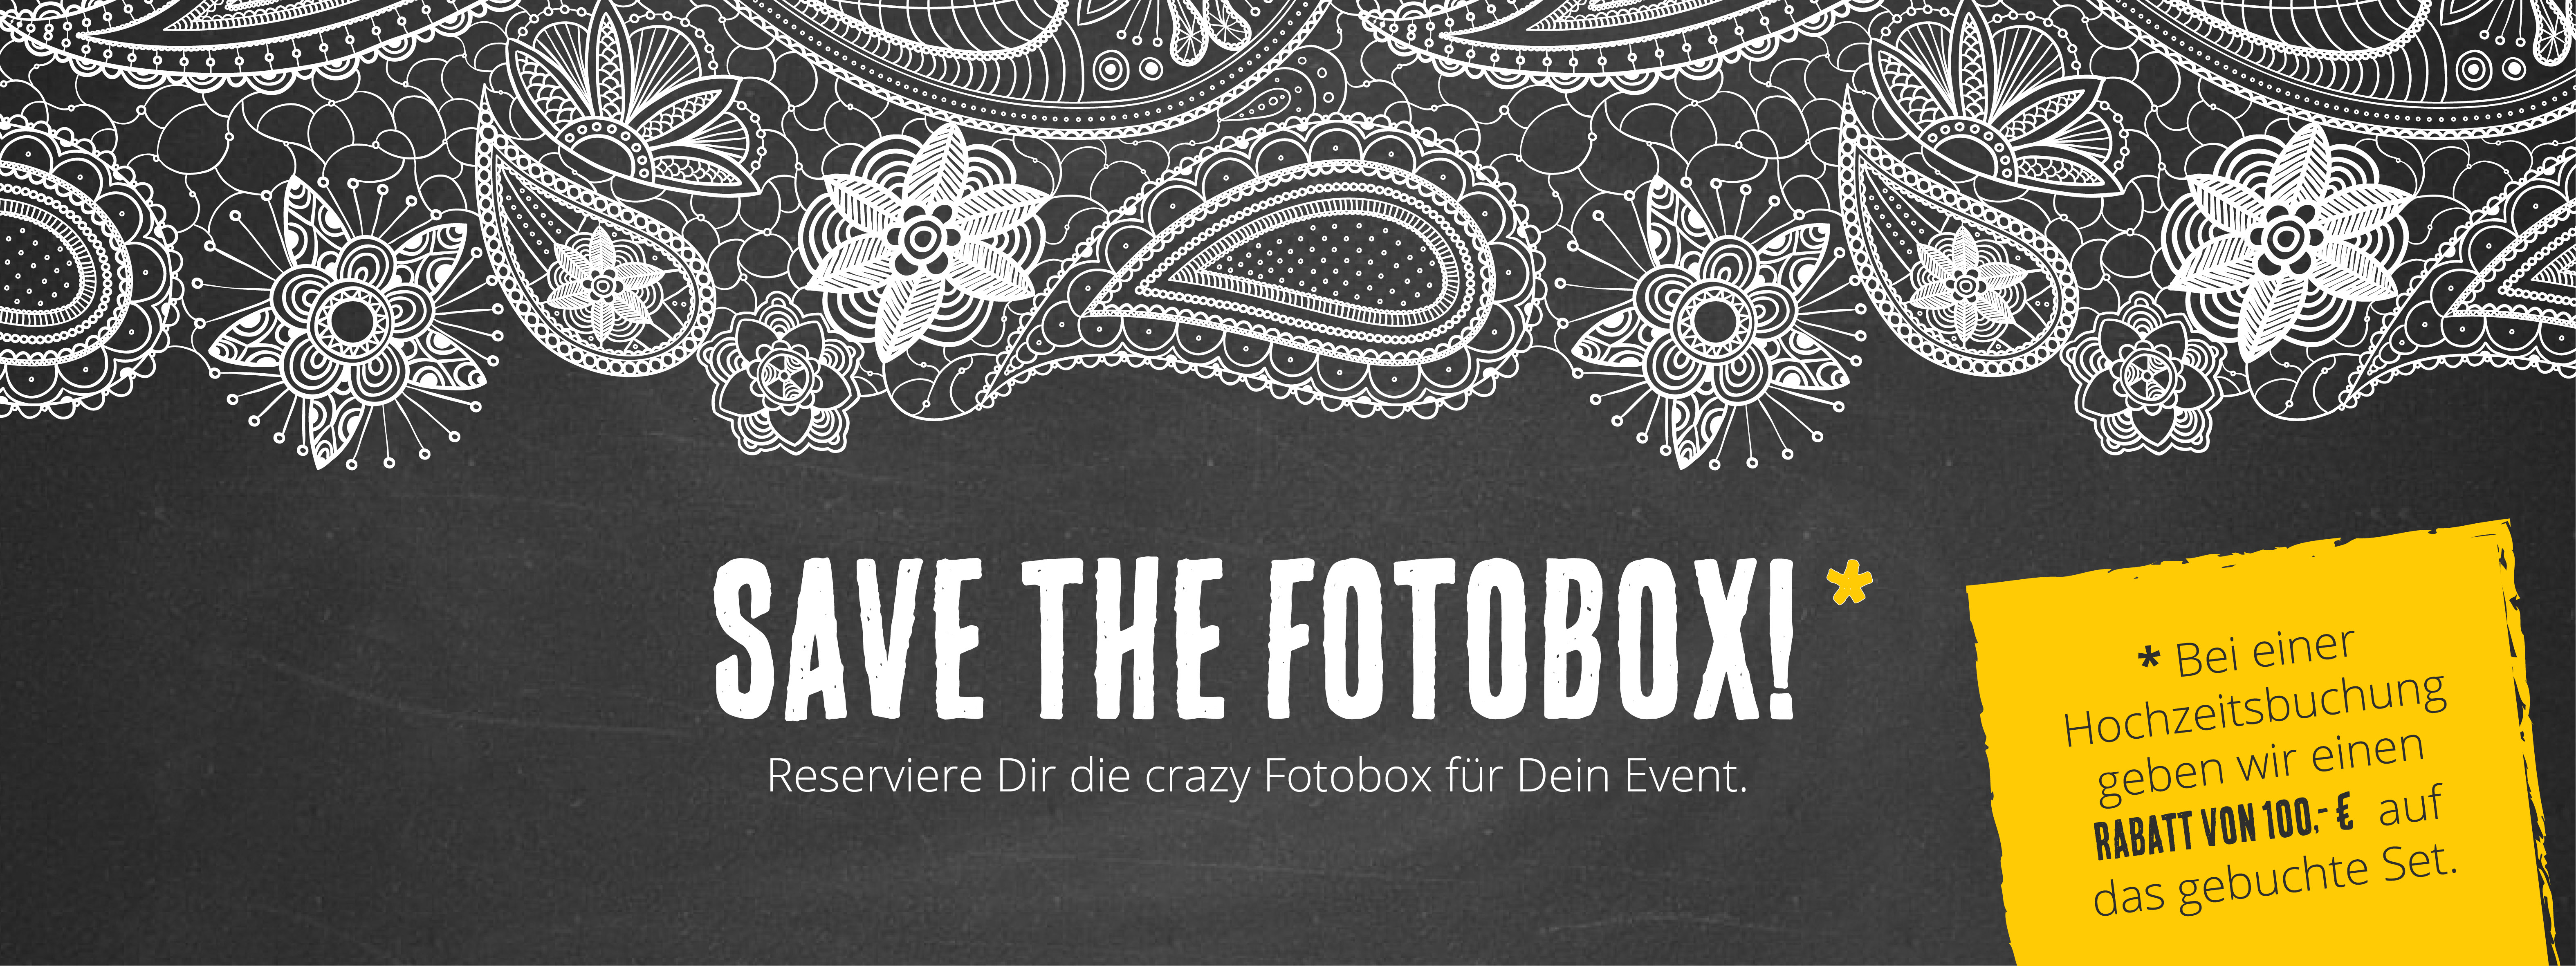 Save the Fotobox!